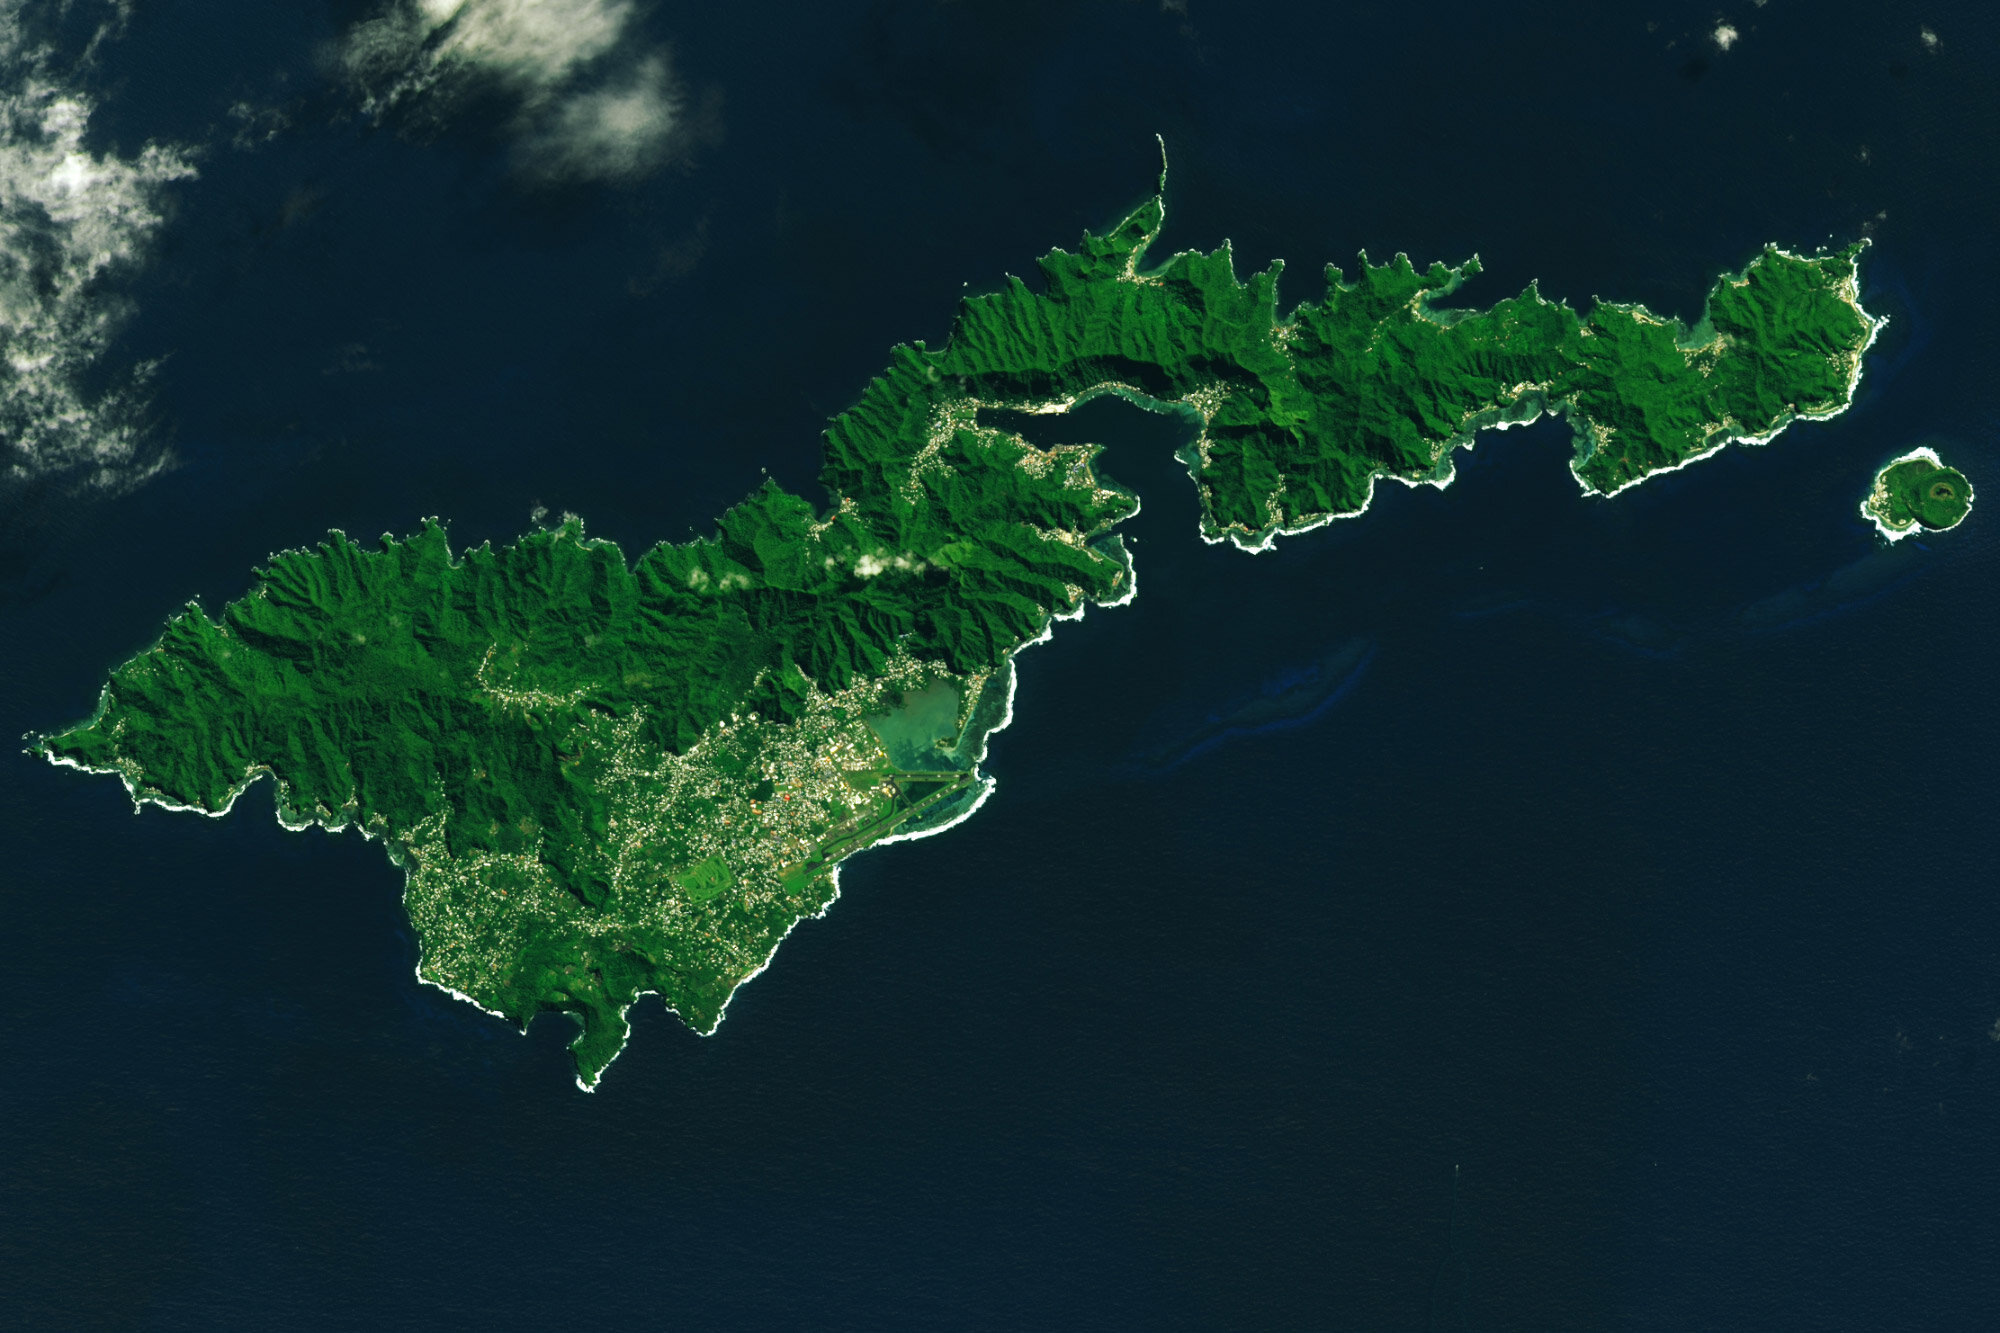 NASA researchers measure sinking land in American Samoa